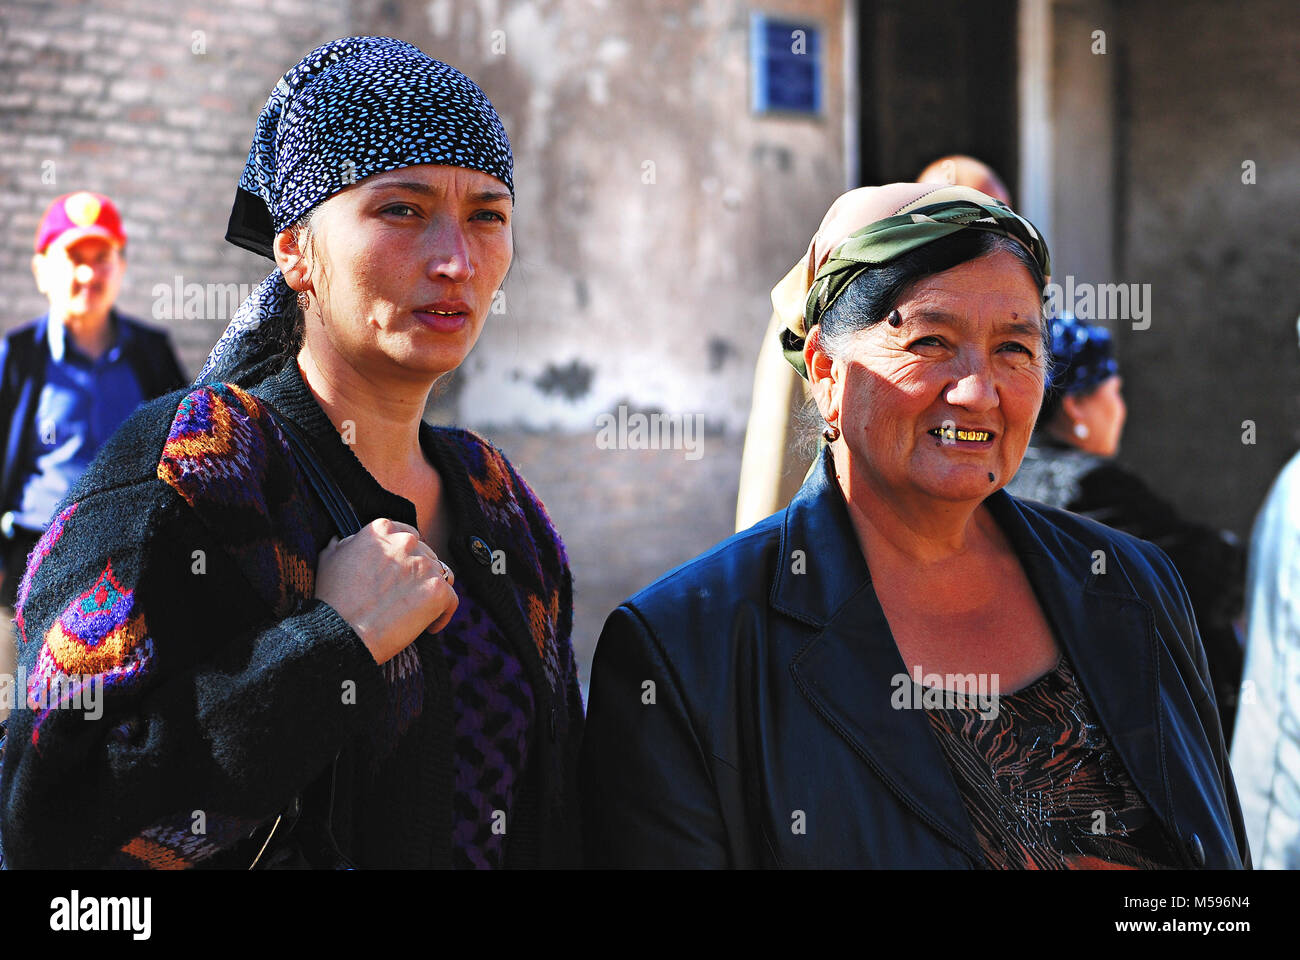 Women with golden teeth walking in the city - Uzbekistan Stock Photo